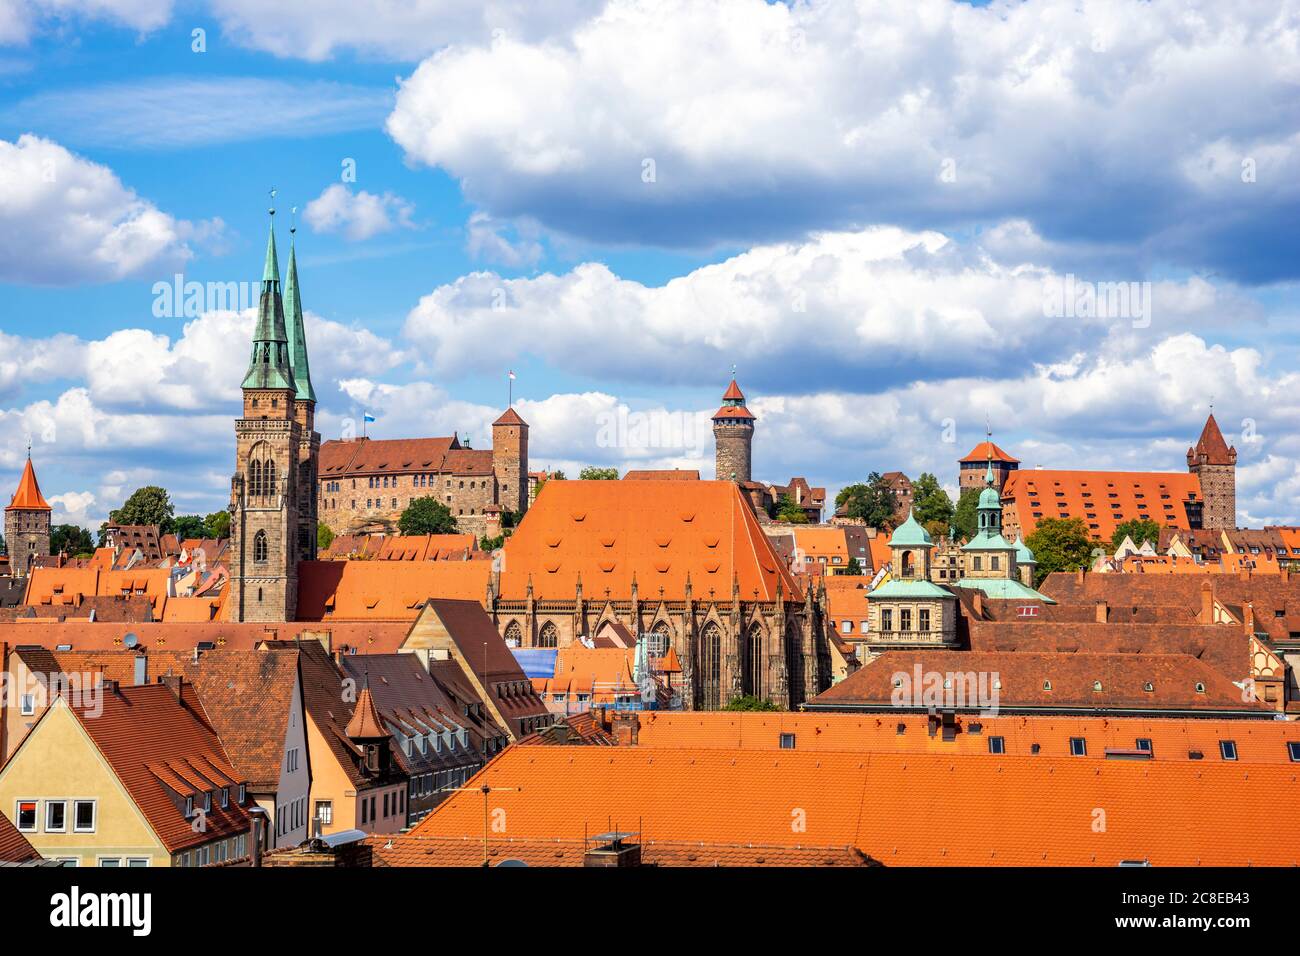 Germany, Bavaria, Nuremberg, Clouds over old town buildings surrounding Nuremberg Castle Stock Photo